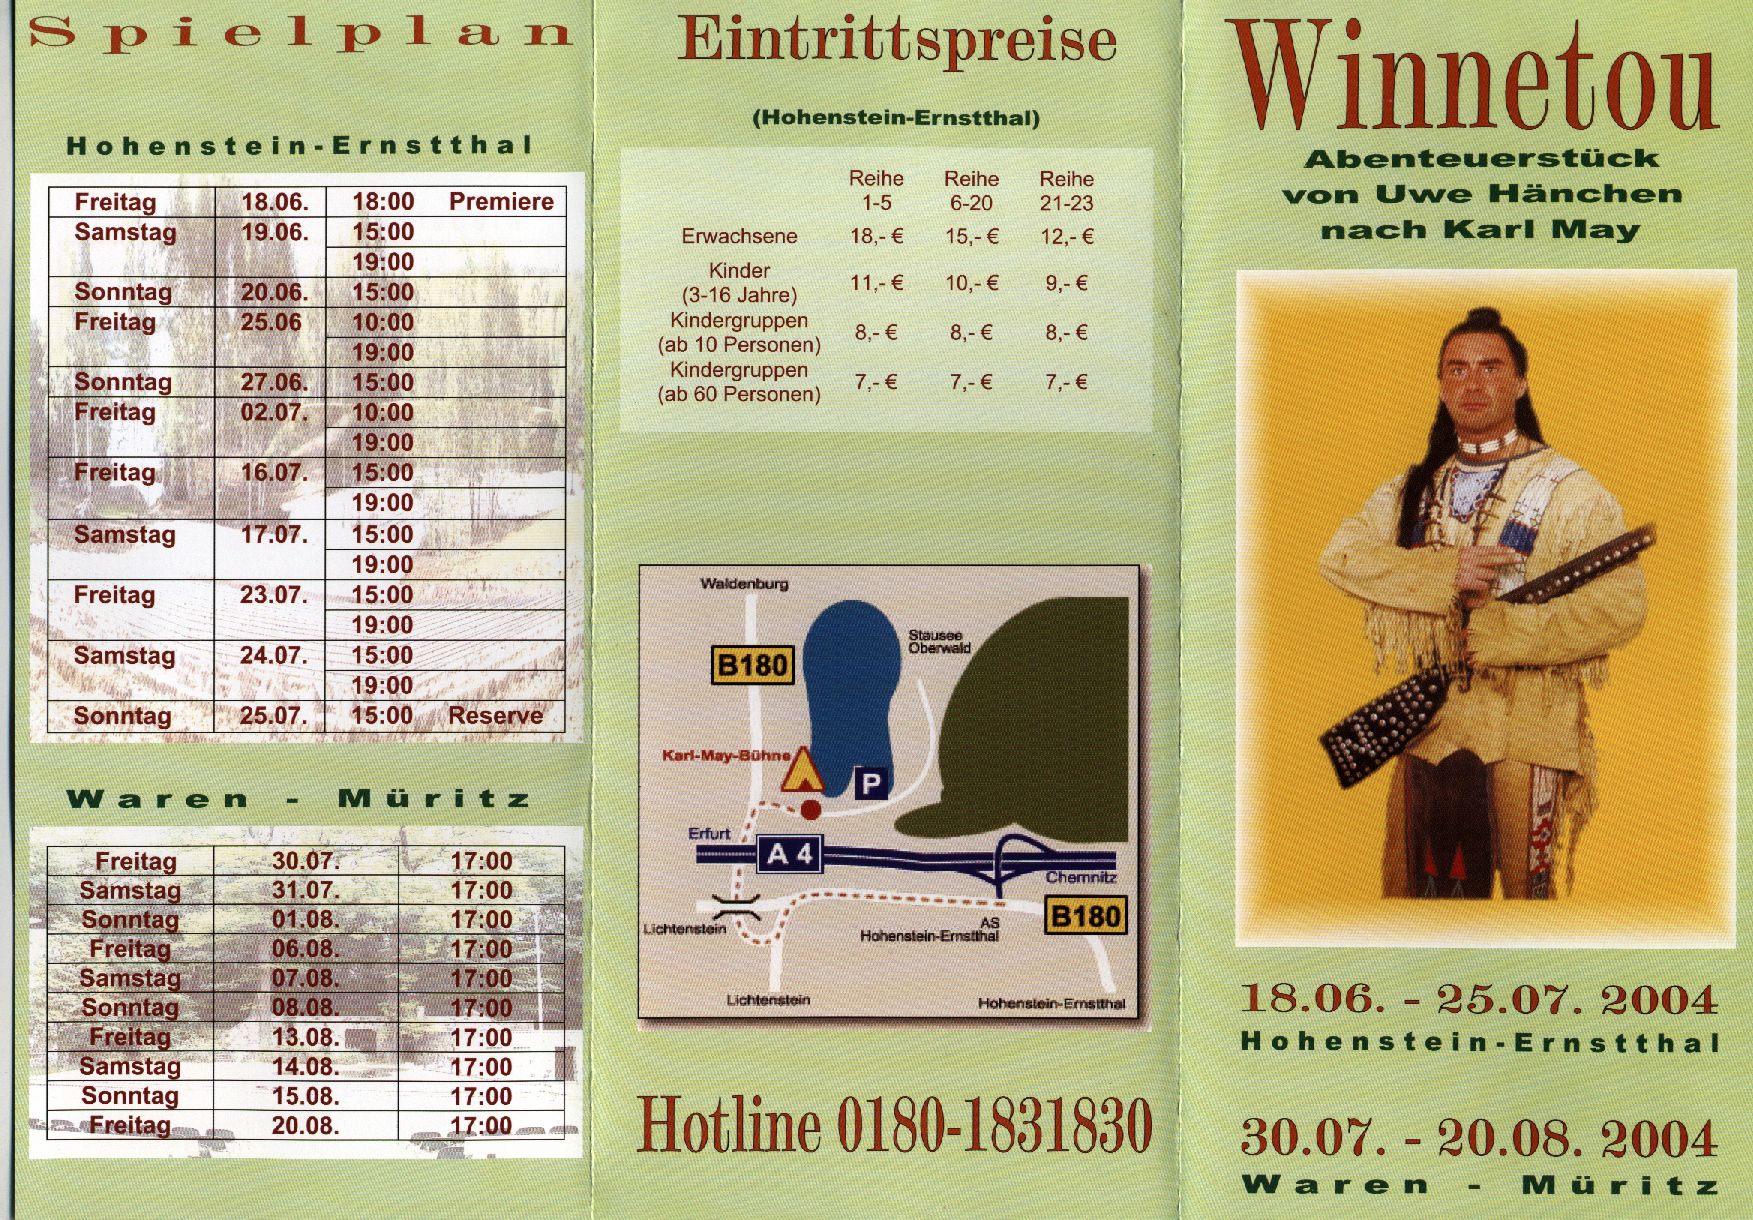 Winnetou I Oberwald 2004 a.jpeg